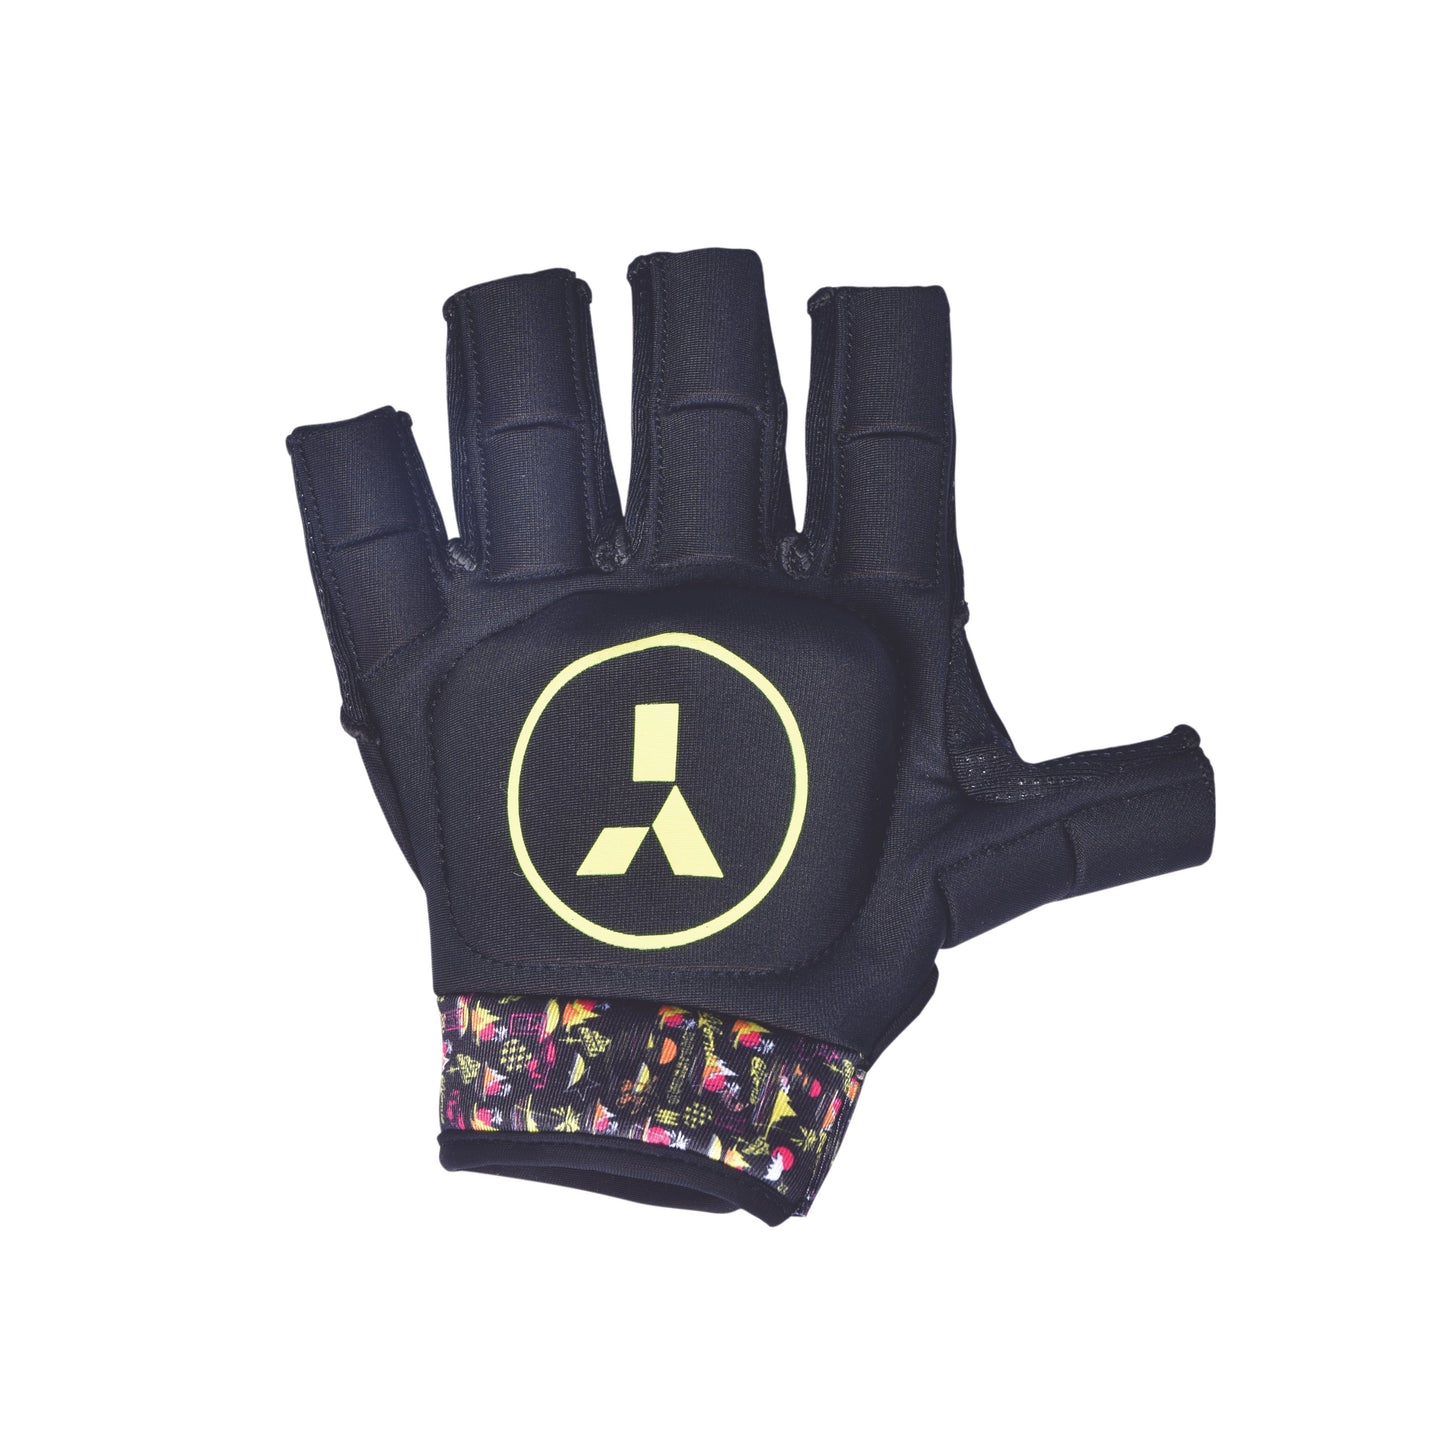 MK4 Glove - XS & S